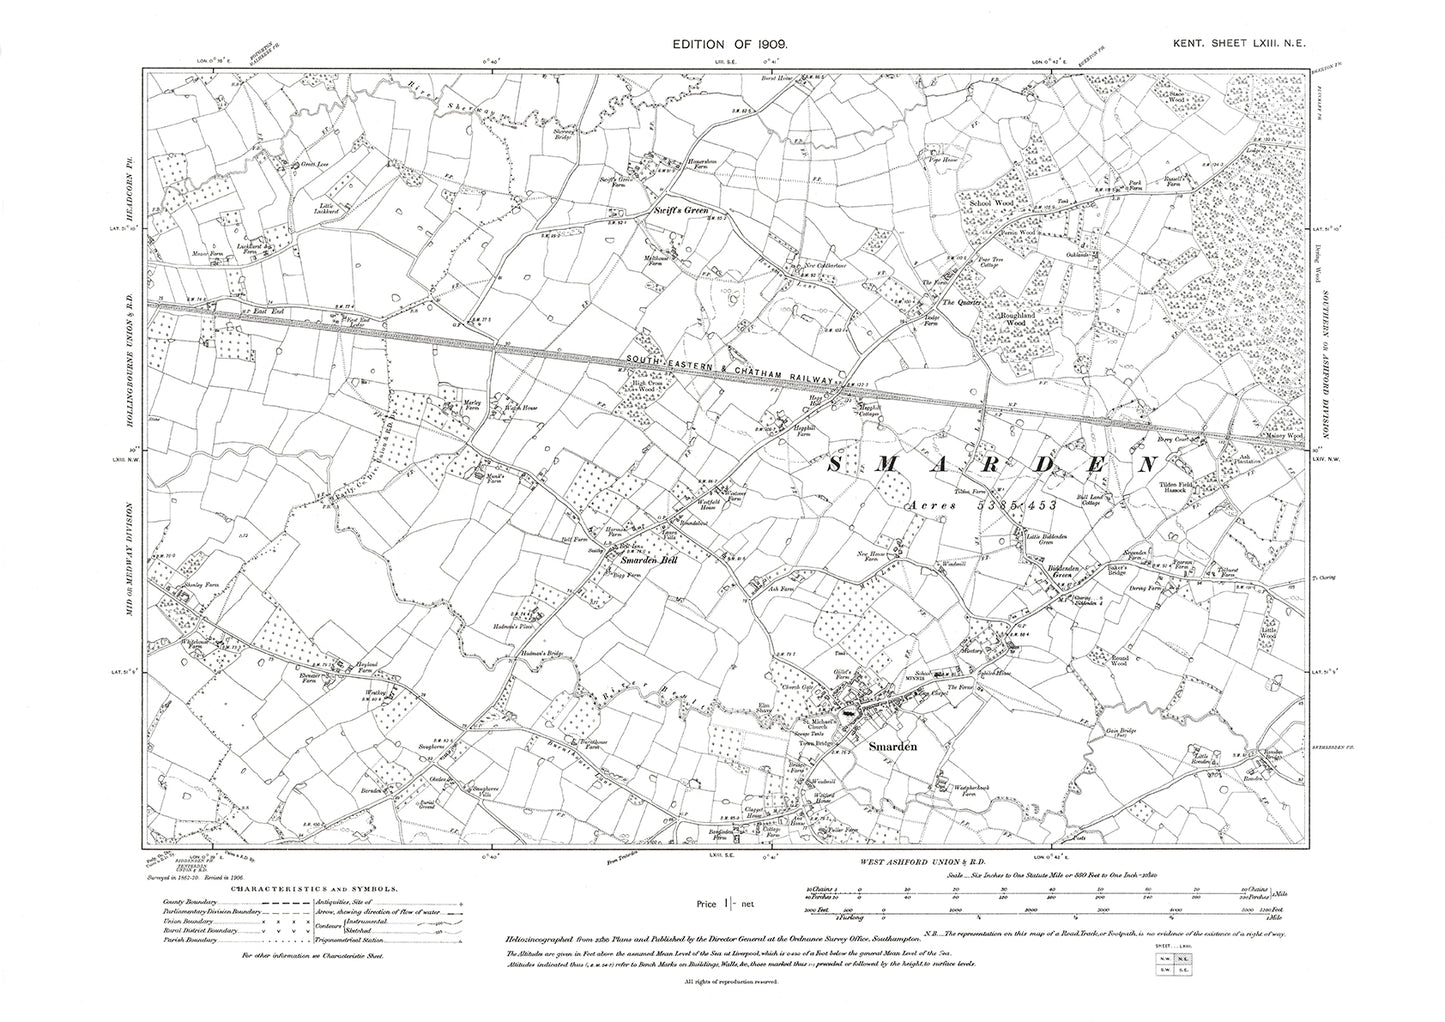 Smarden, old map Kent 1909: 63NE